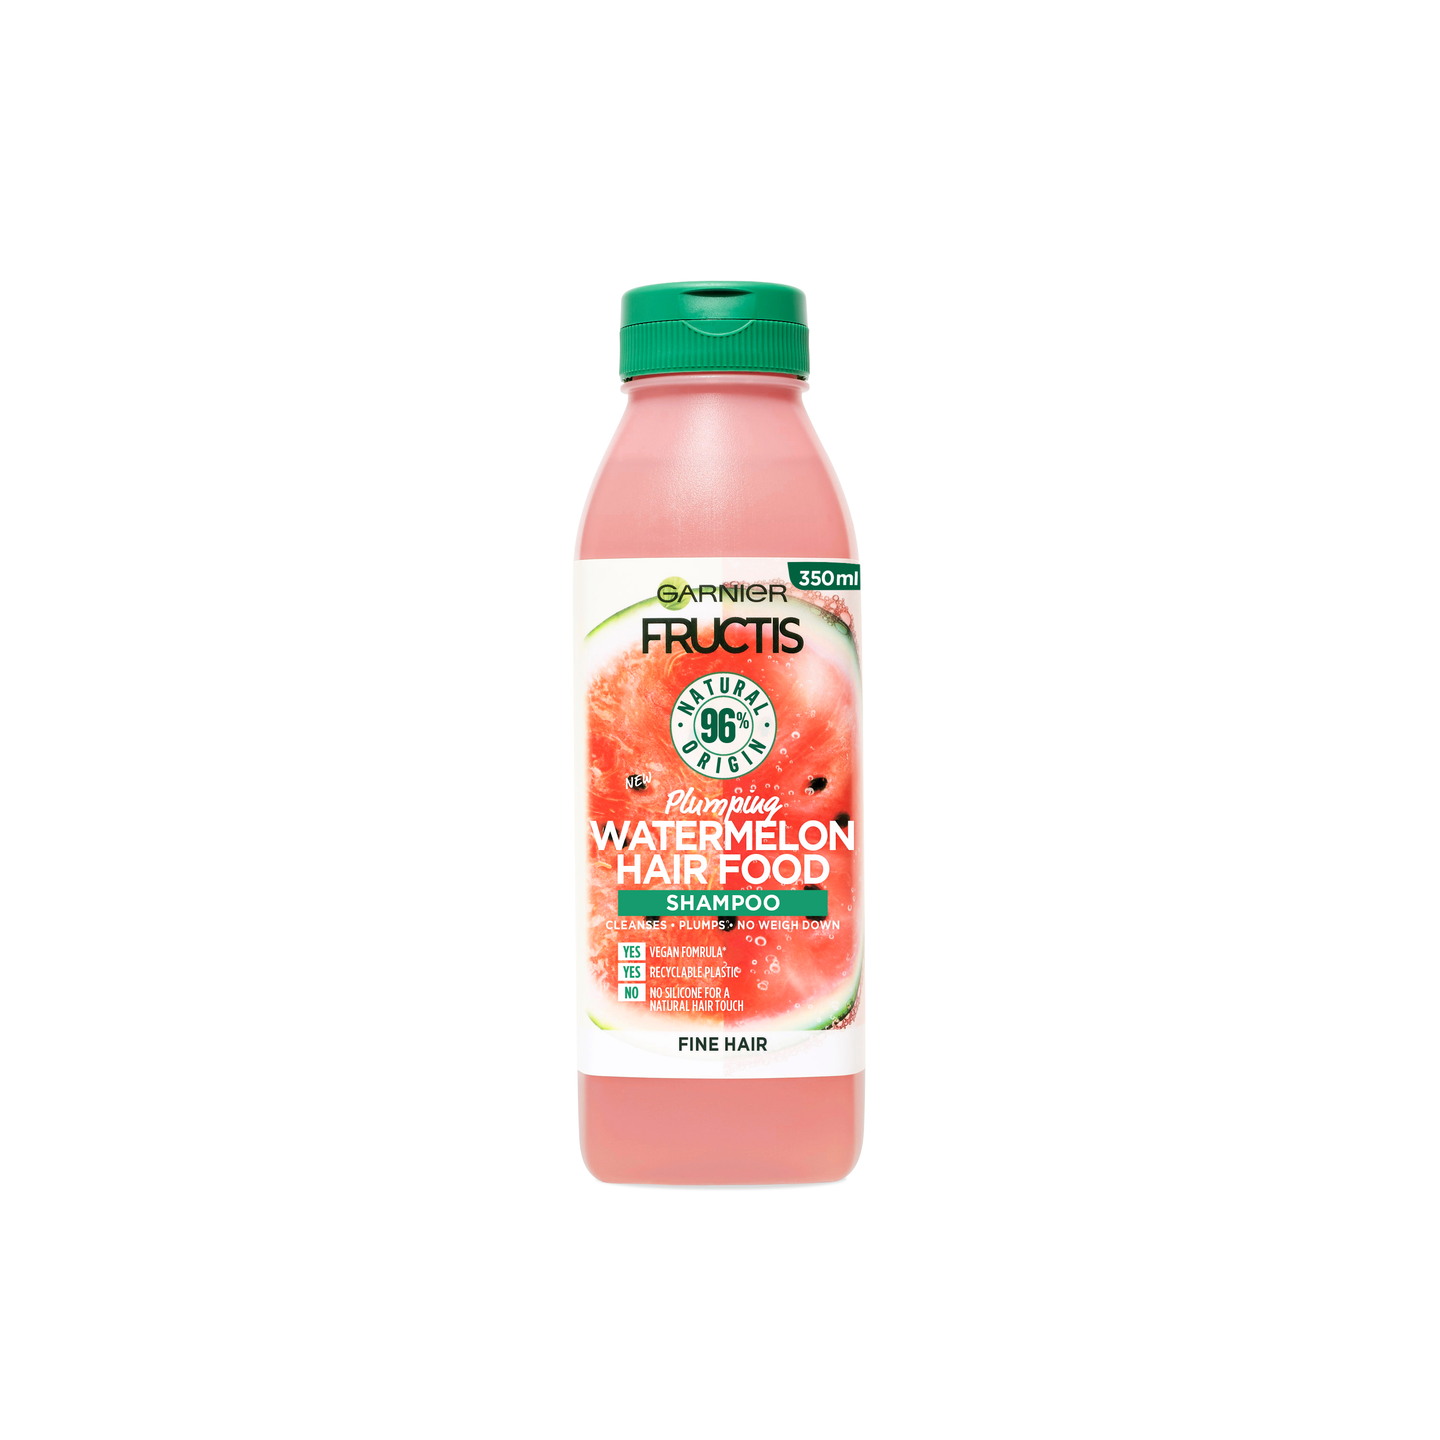 Garnier Fructis Hair Food Watermelon shampoo hennoille hiuksille 350ml